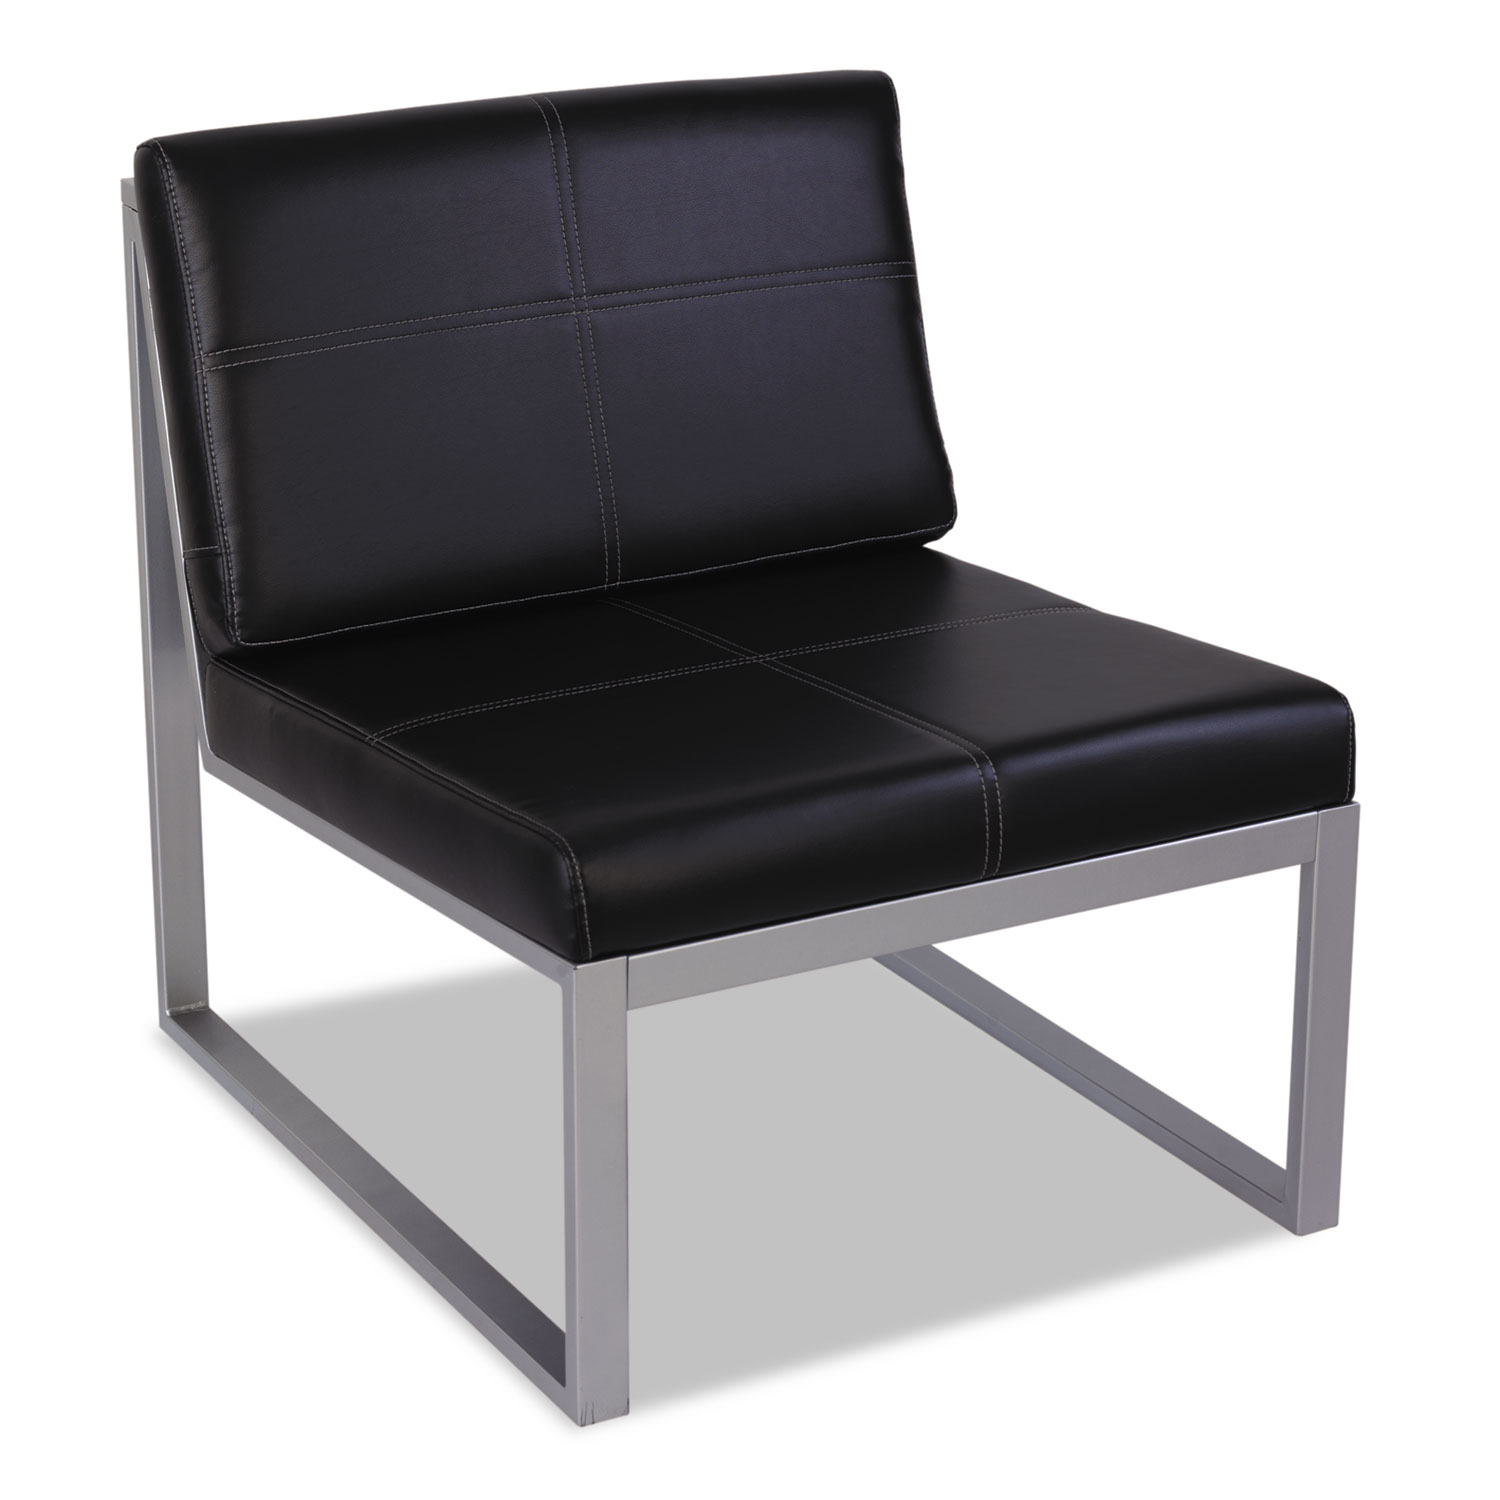  Alera ALERL8319CS Alera Ispara Series Armless Chair, 26.38 x 31.13 x 30, Black Seat/Black Back, Silver Base (ALERL8319CS) 